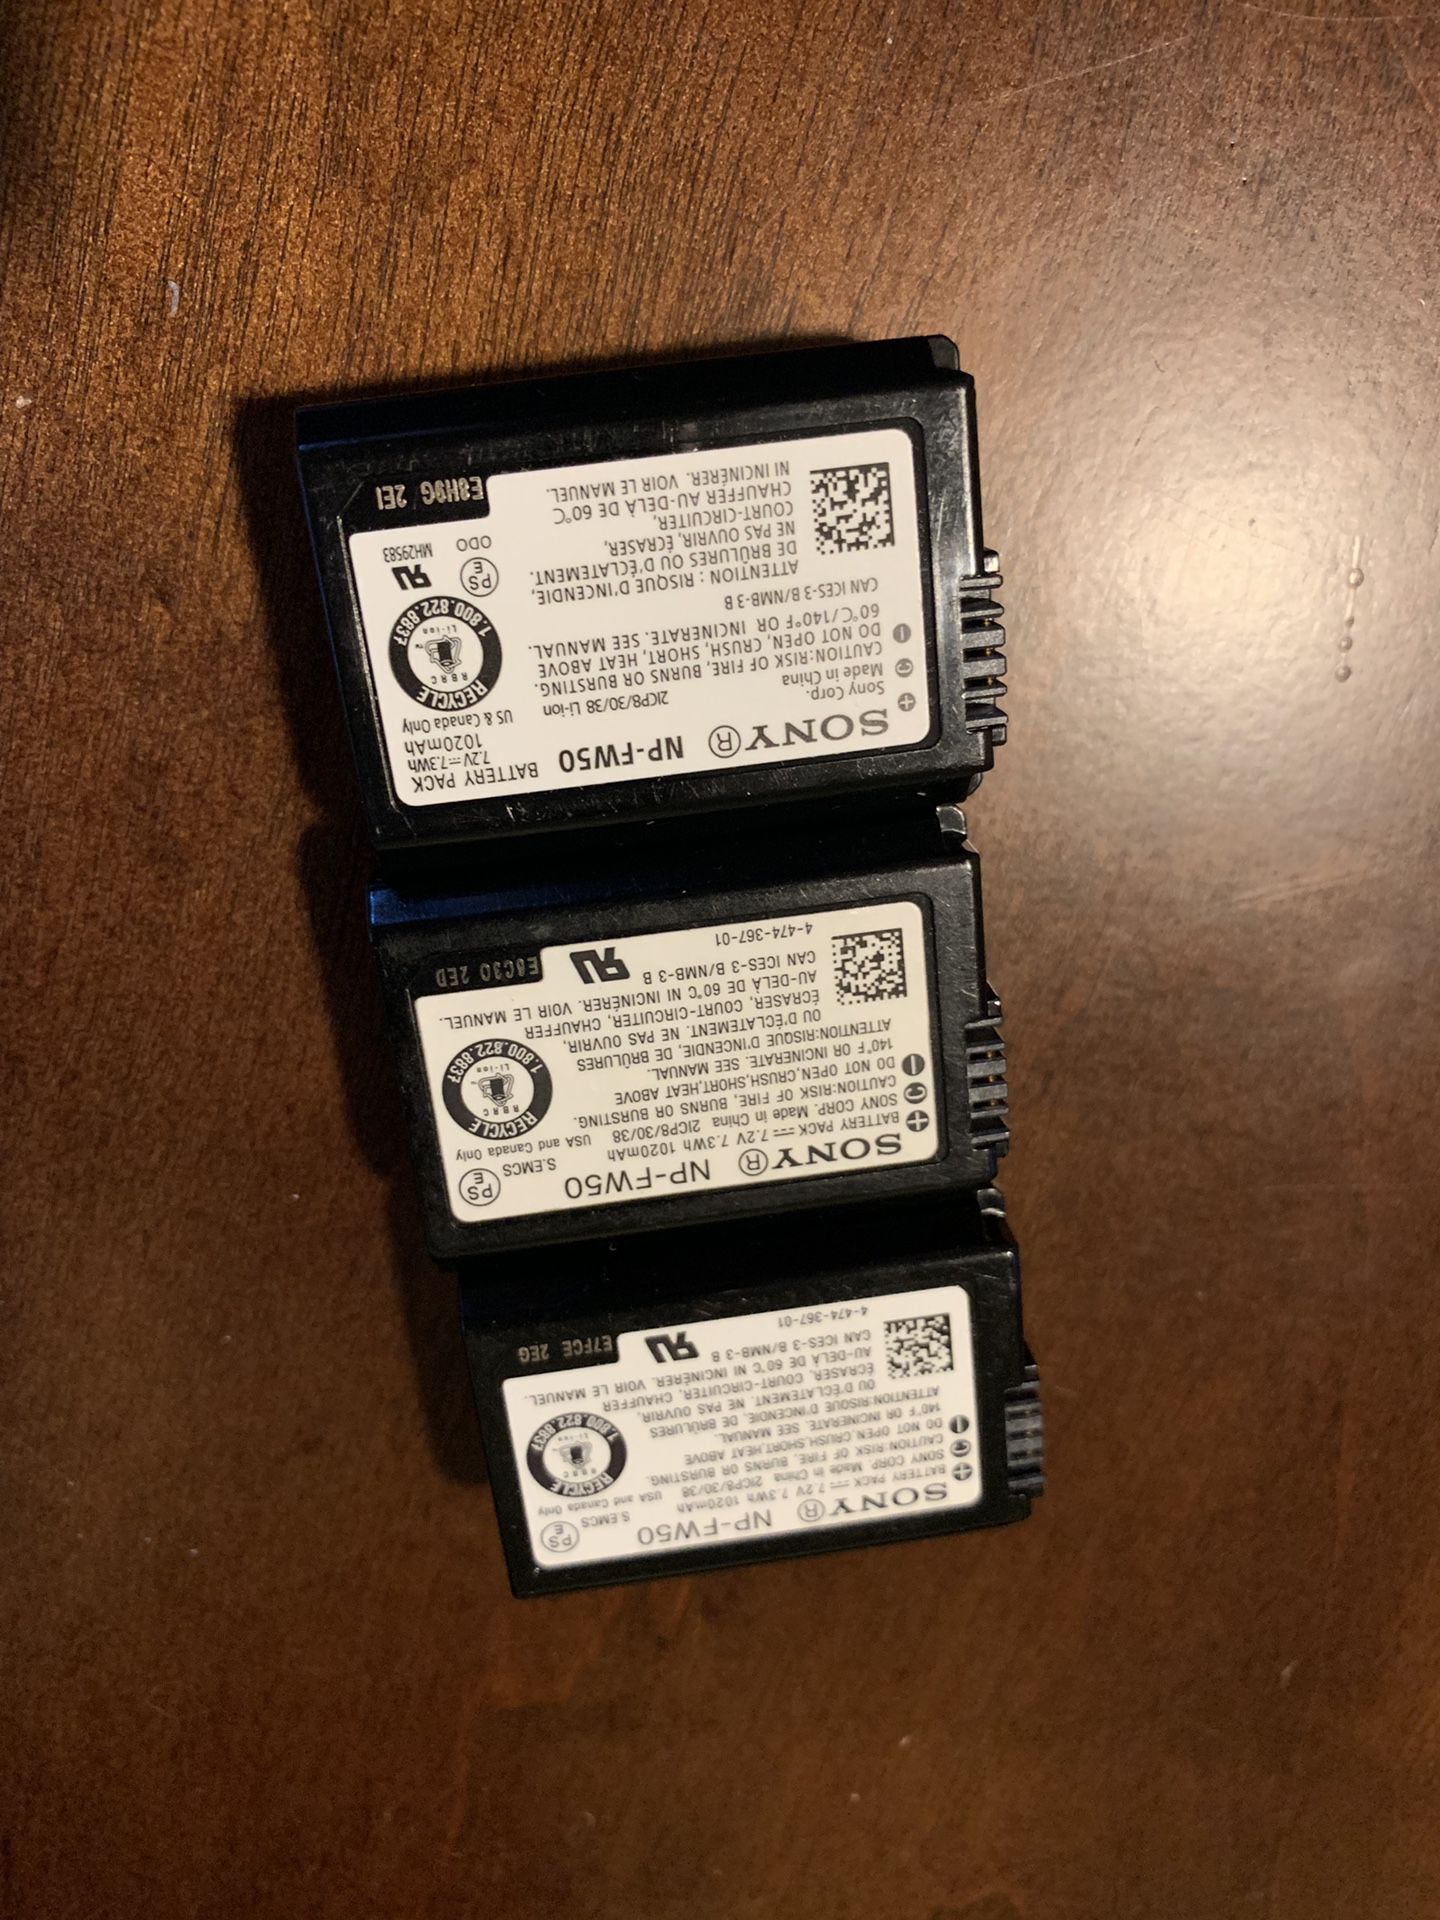 Sony fw-50 batteries